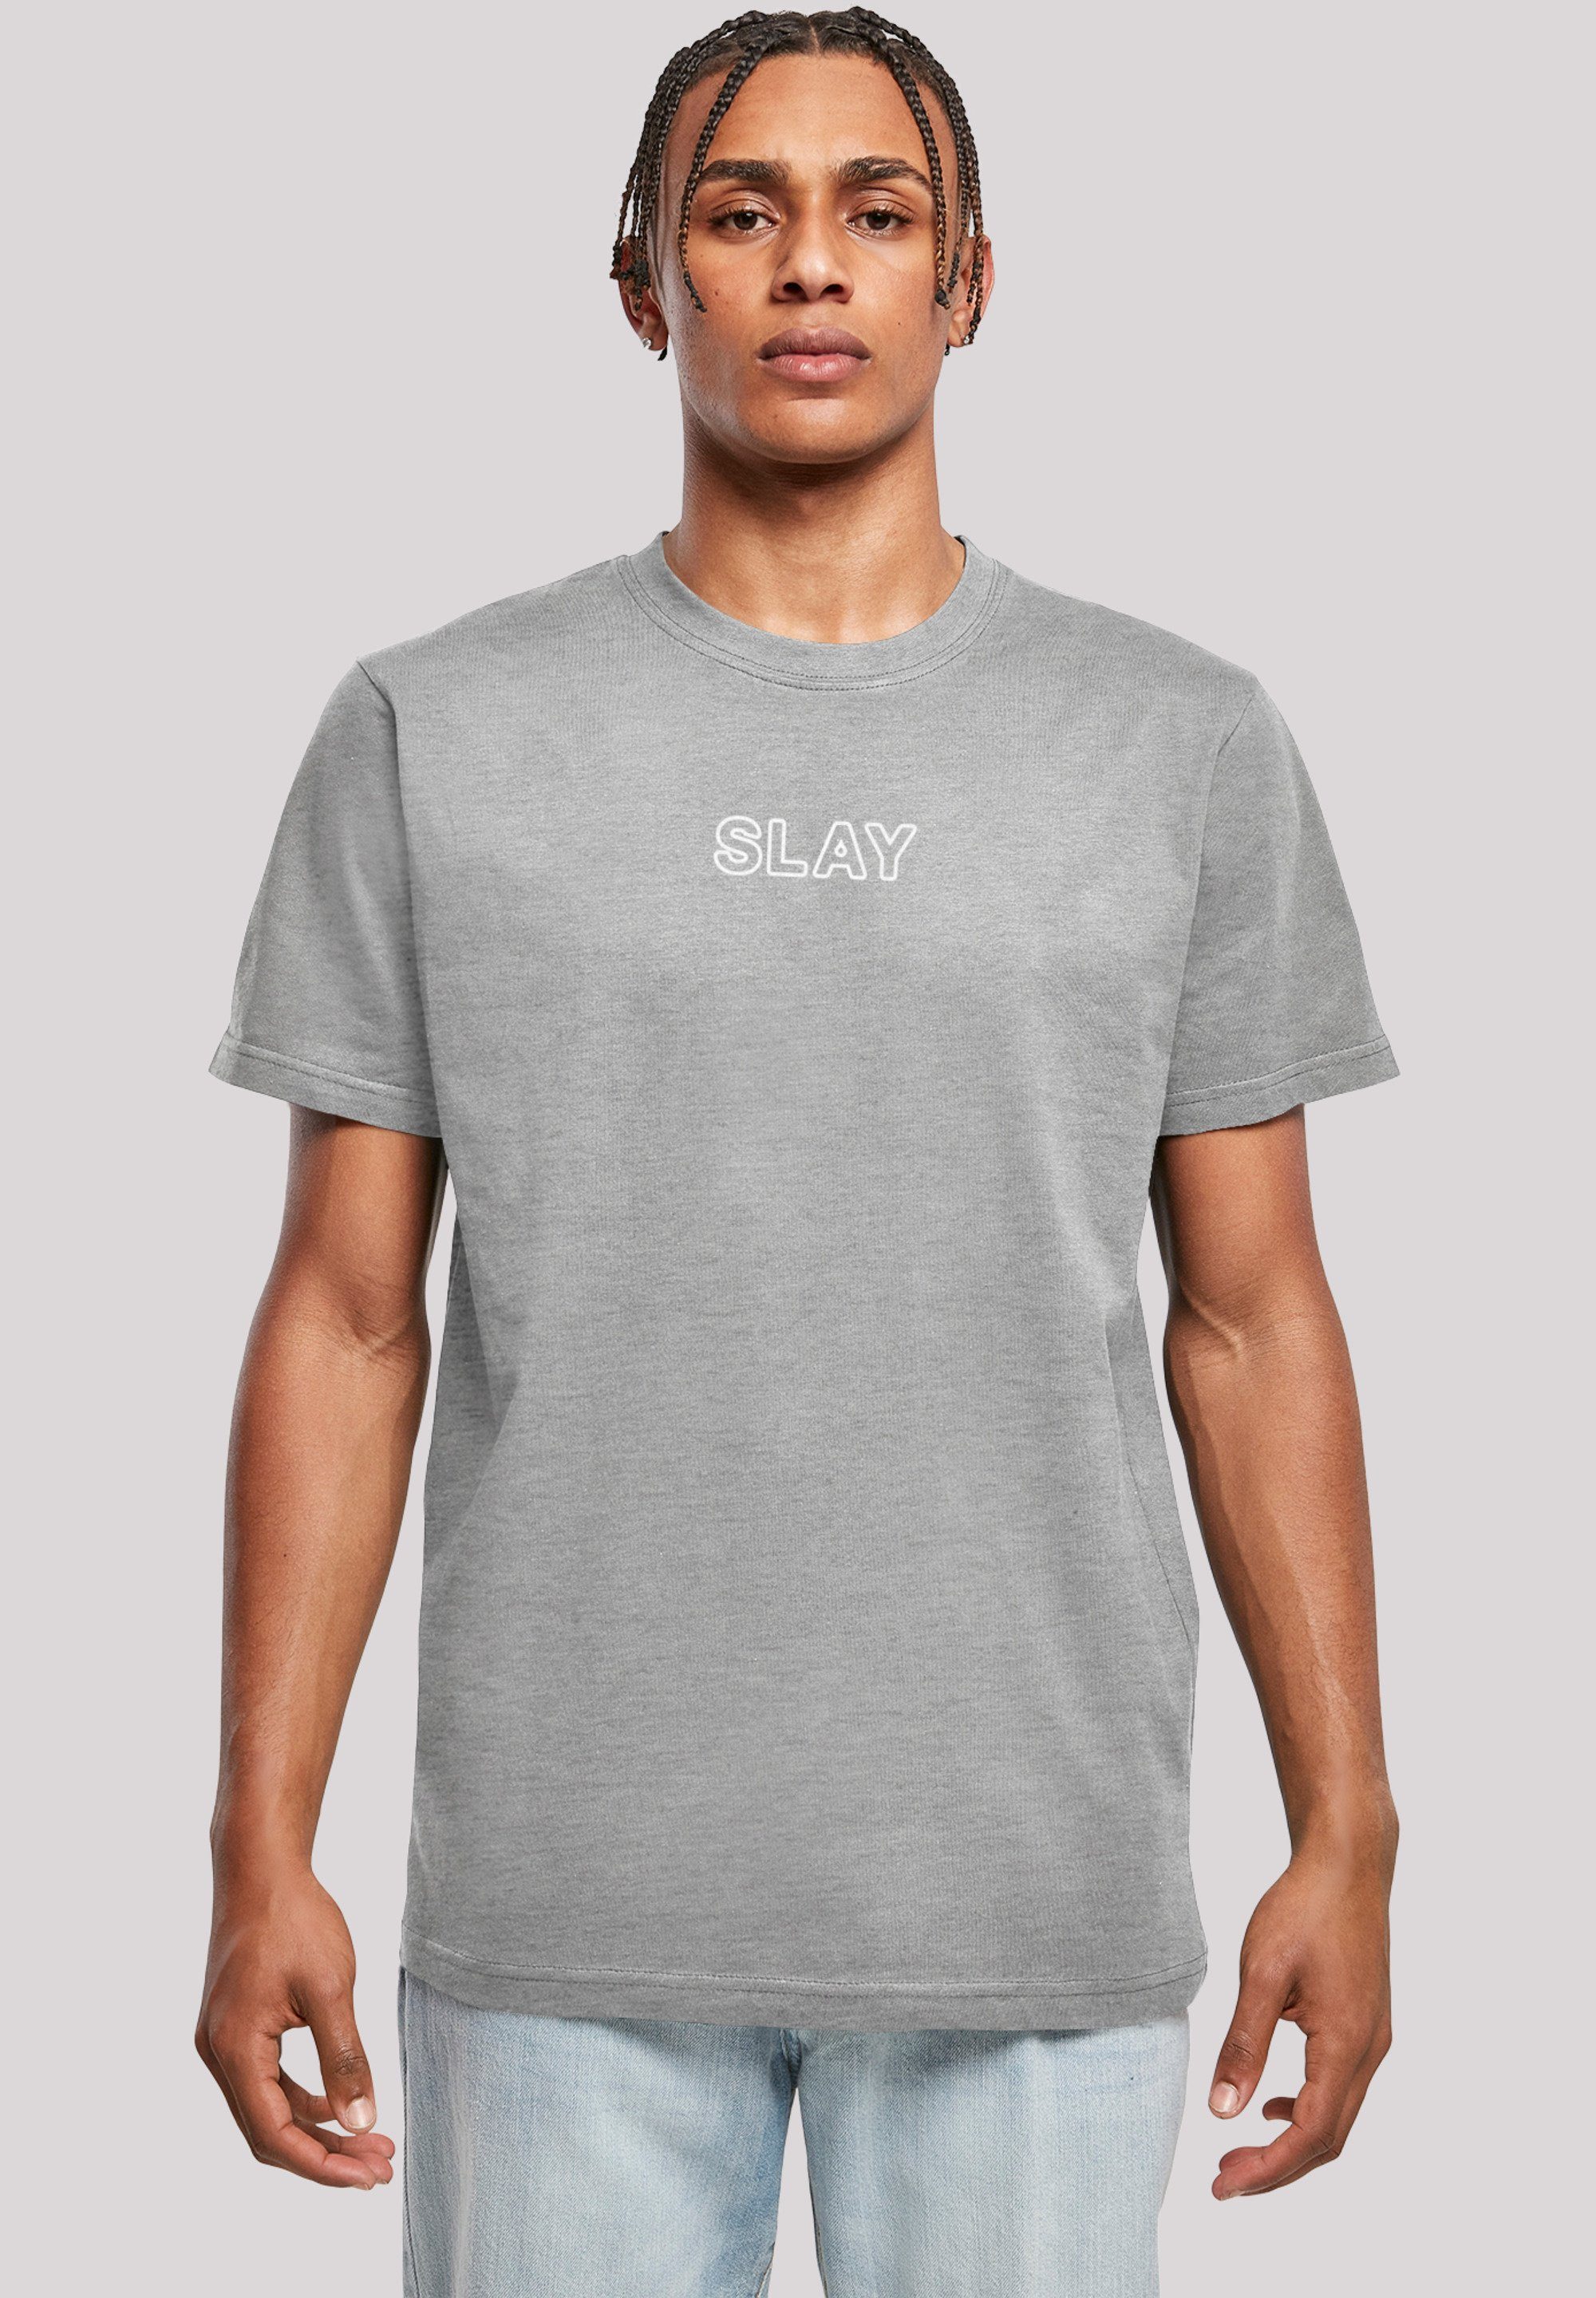 Slay F4NT4STIC grey heather T-Shirt slang 2022, Jugendwort